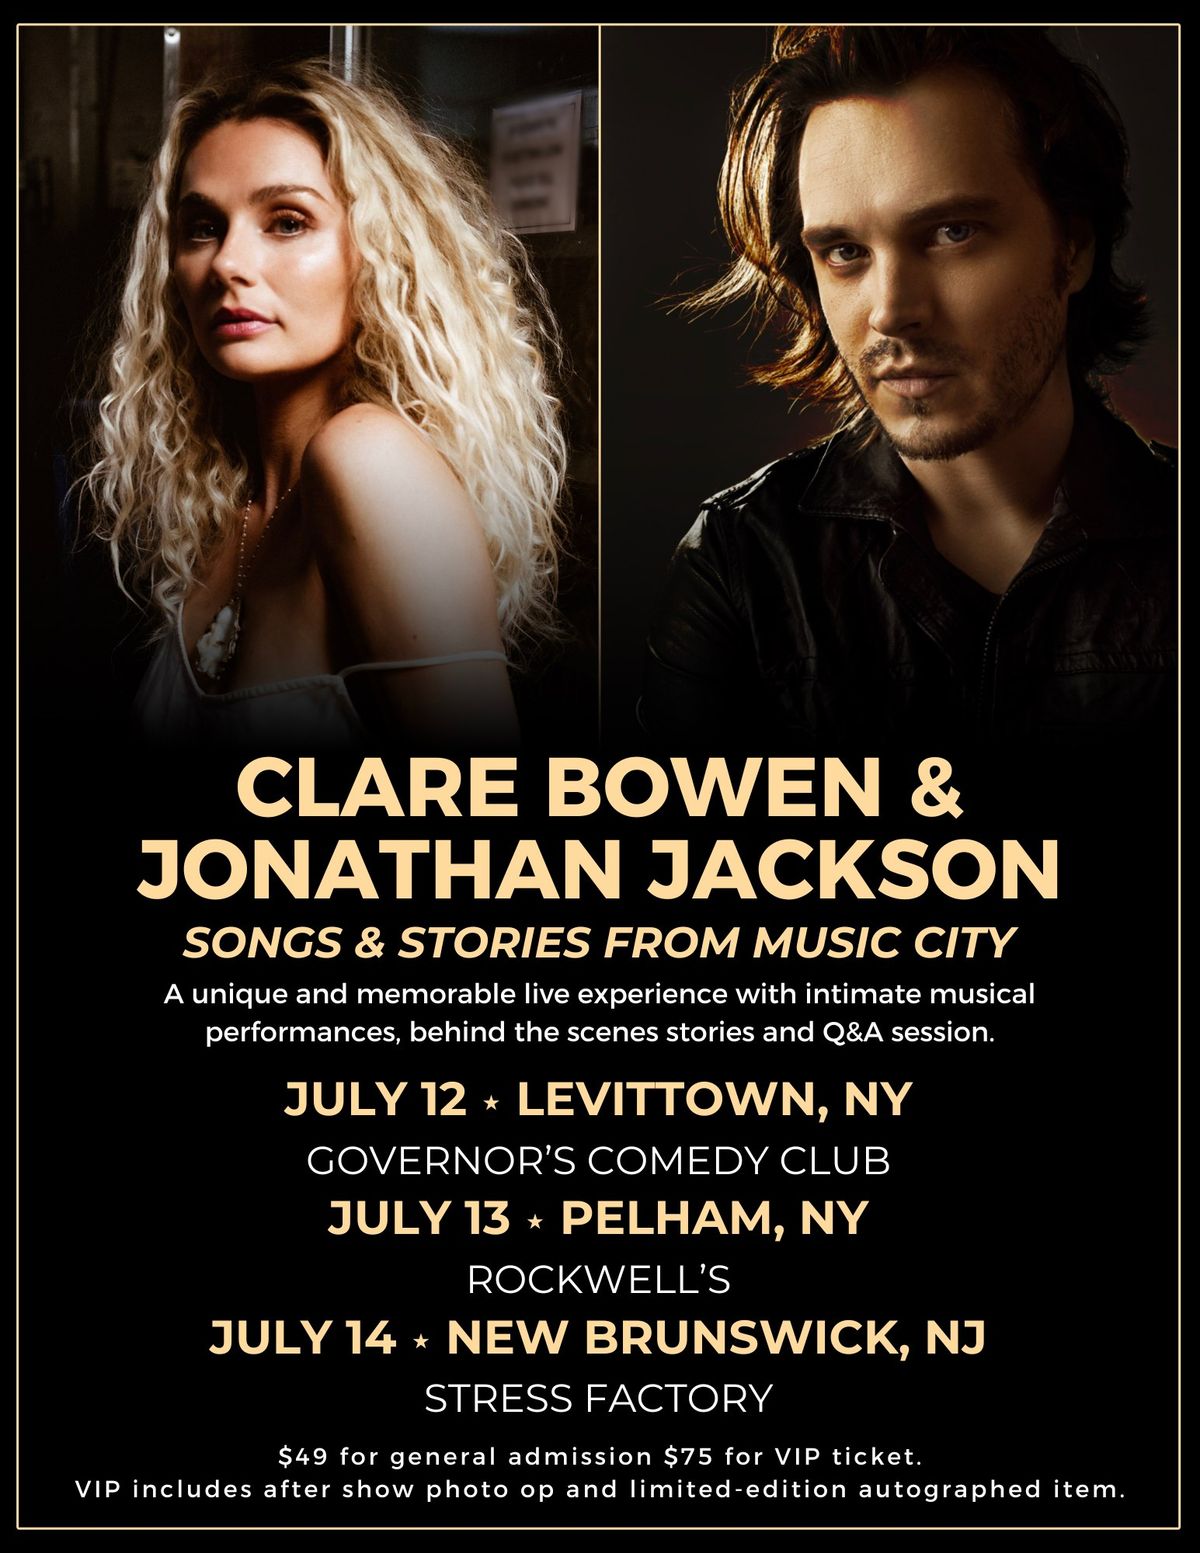 Clare Bowen and Jonathan Jackson in New Brunswick, NJ